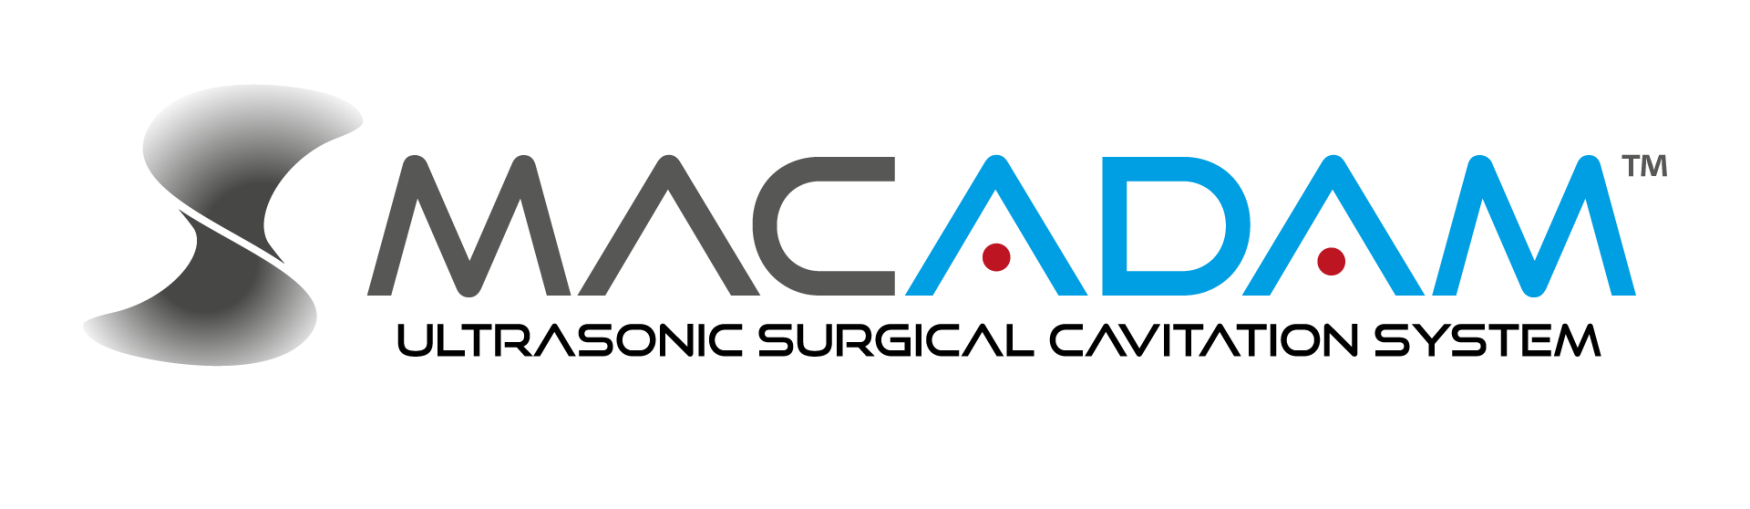 Macadam™ Ultrasonic Surgical Cavitation System